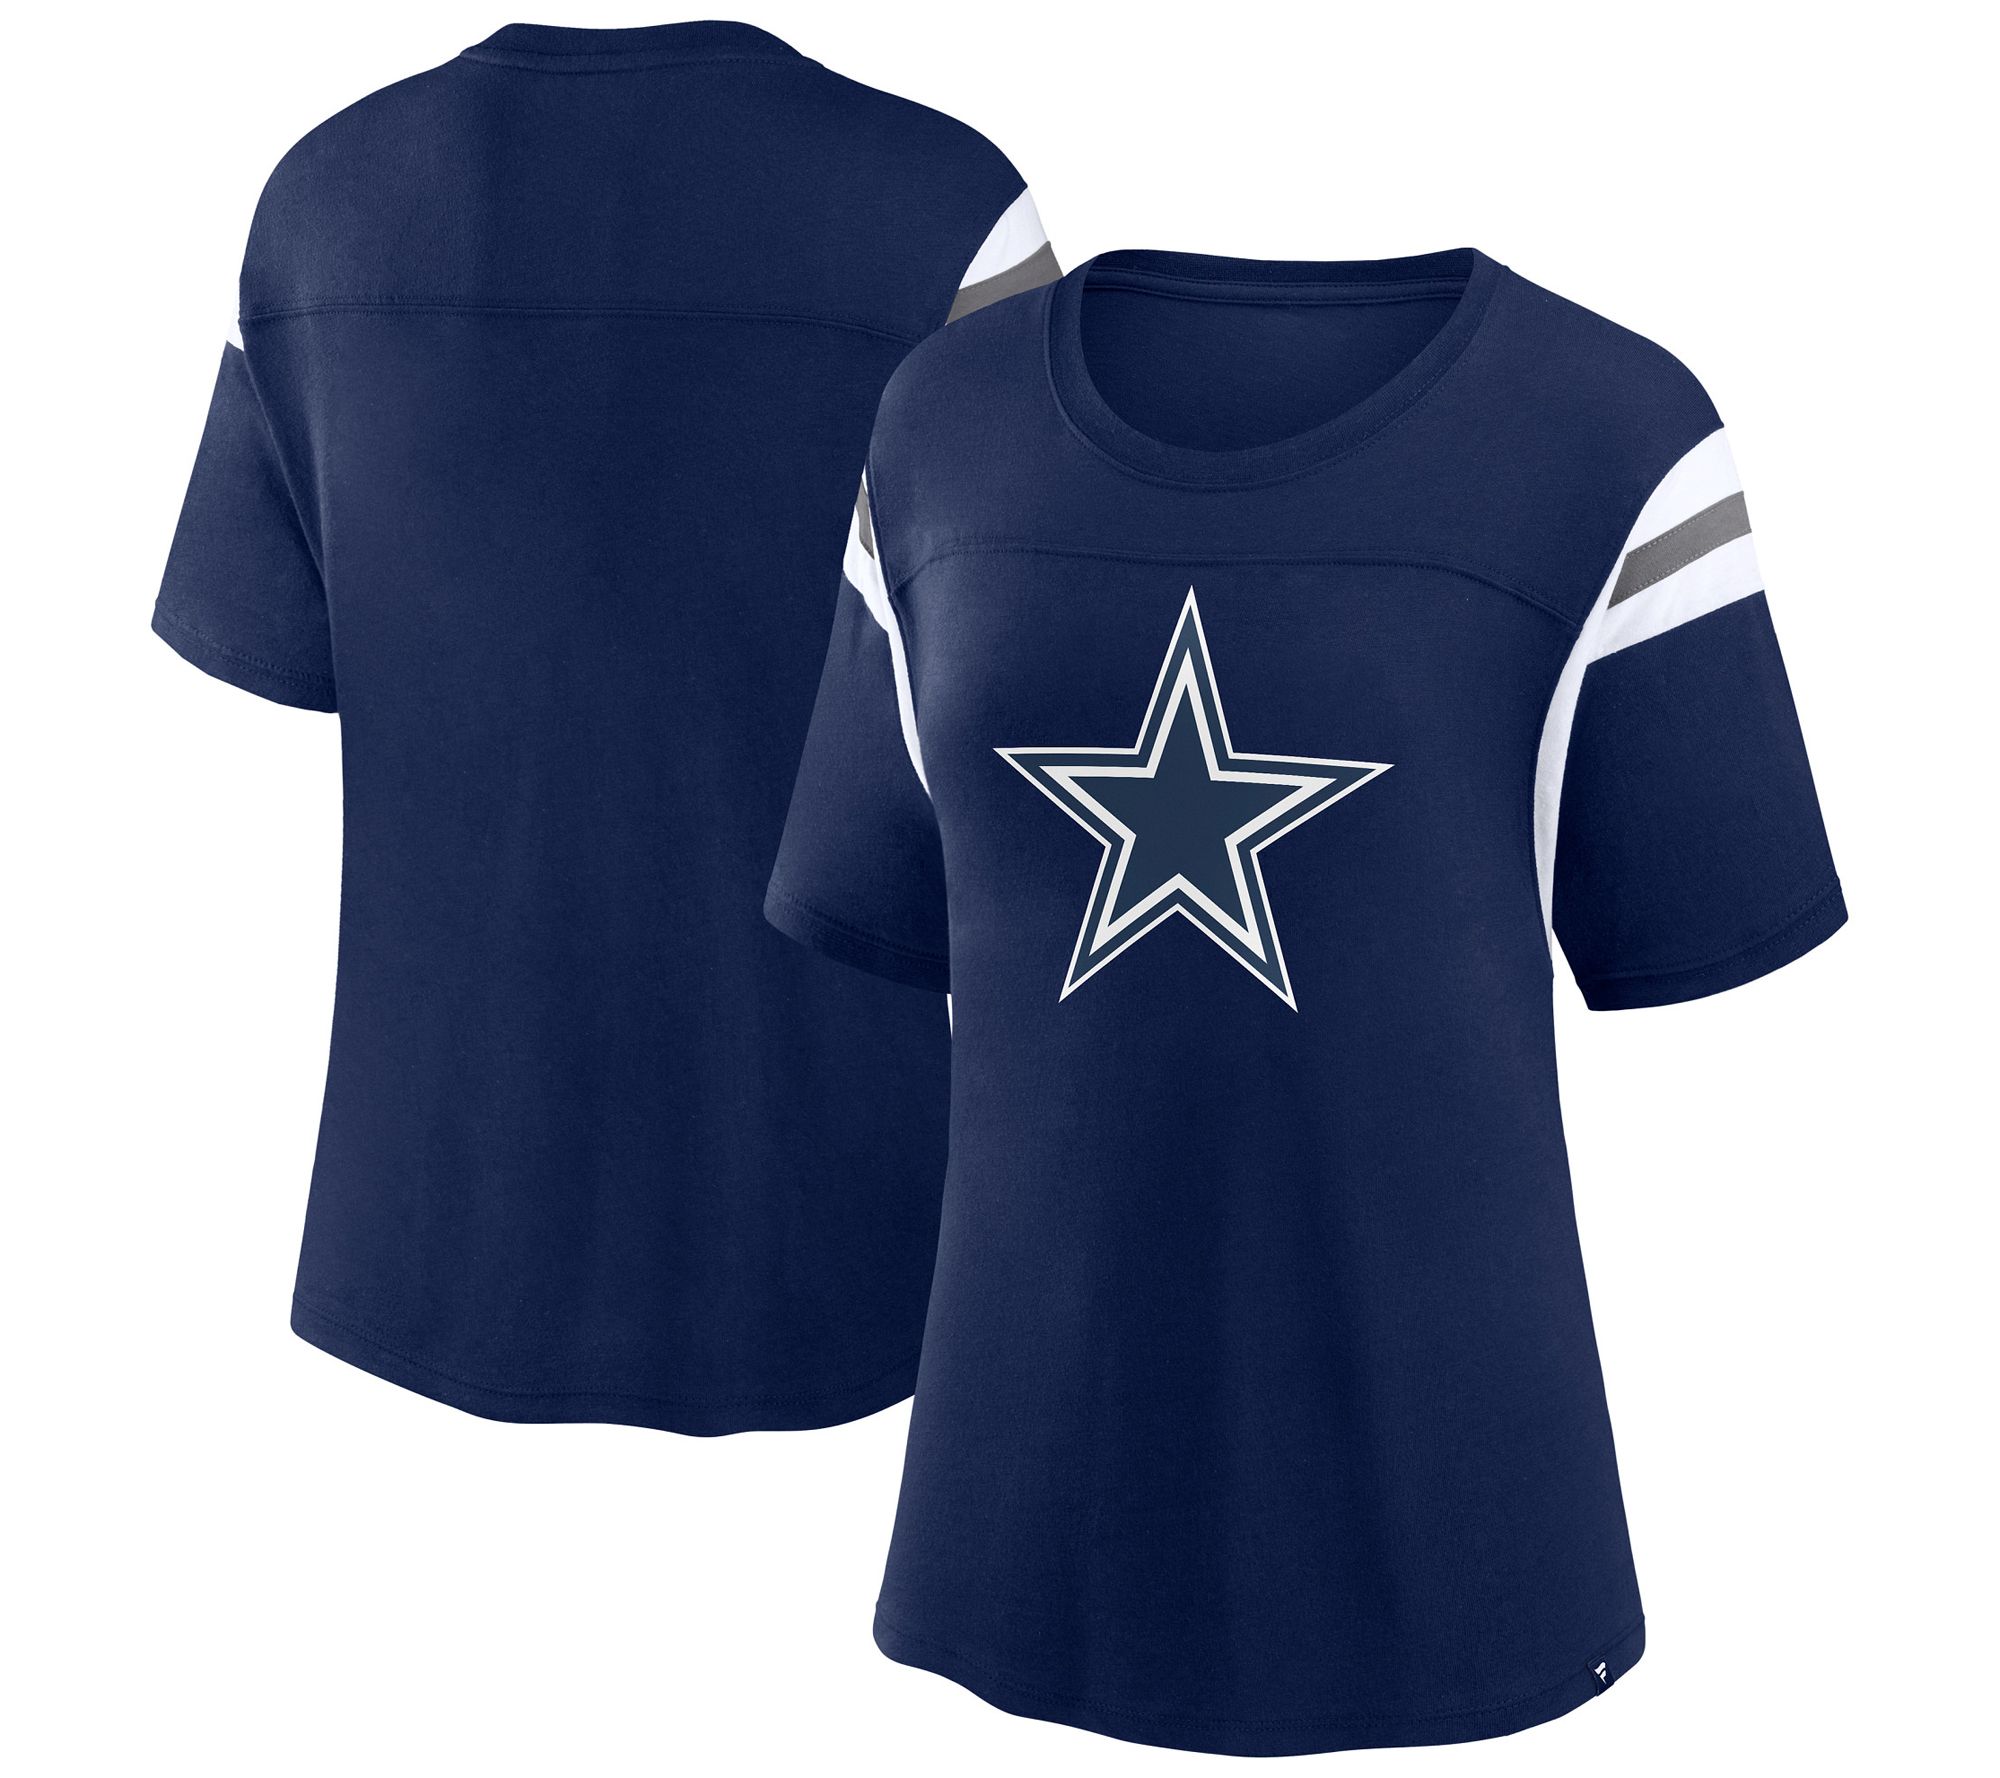 Vintage Dallas Cowboys Sweatshirt Crewneck Size Medium Blue NFL – Throwback  Vault